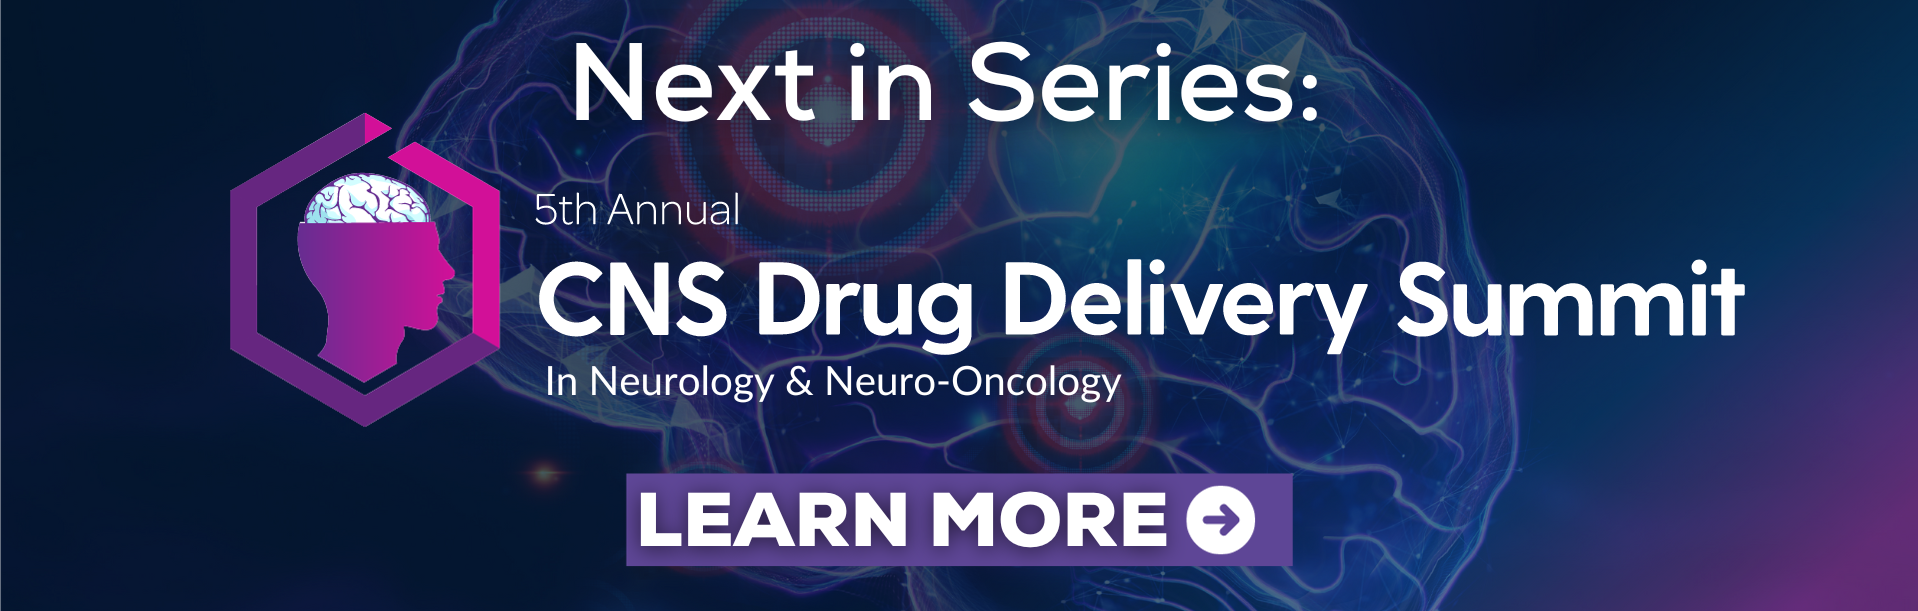 CNS Drug Development Banner